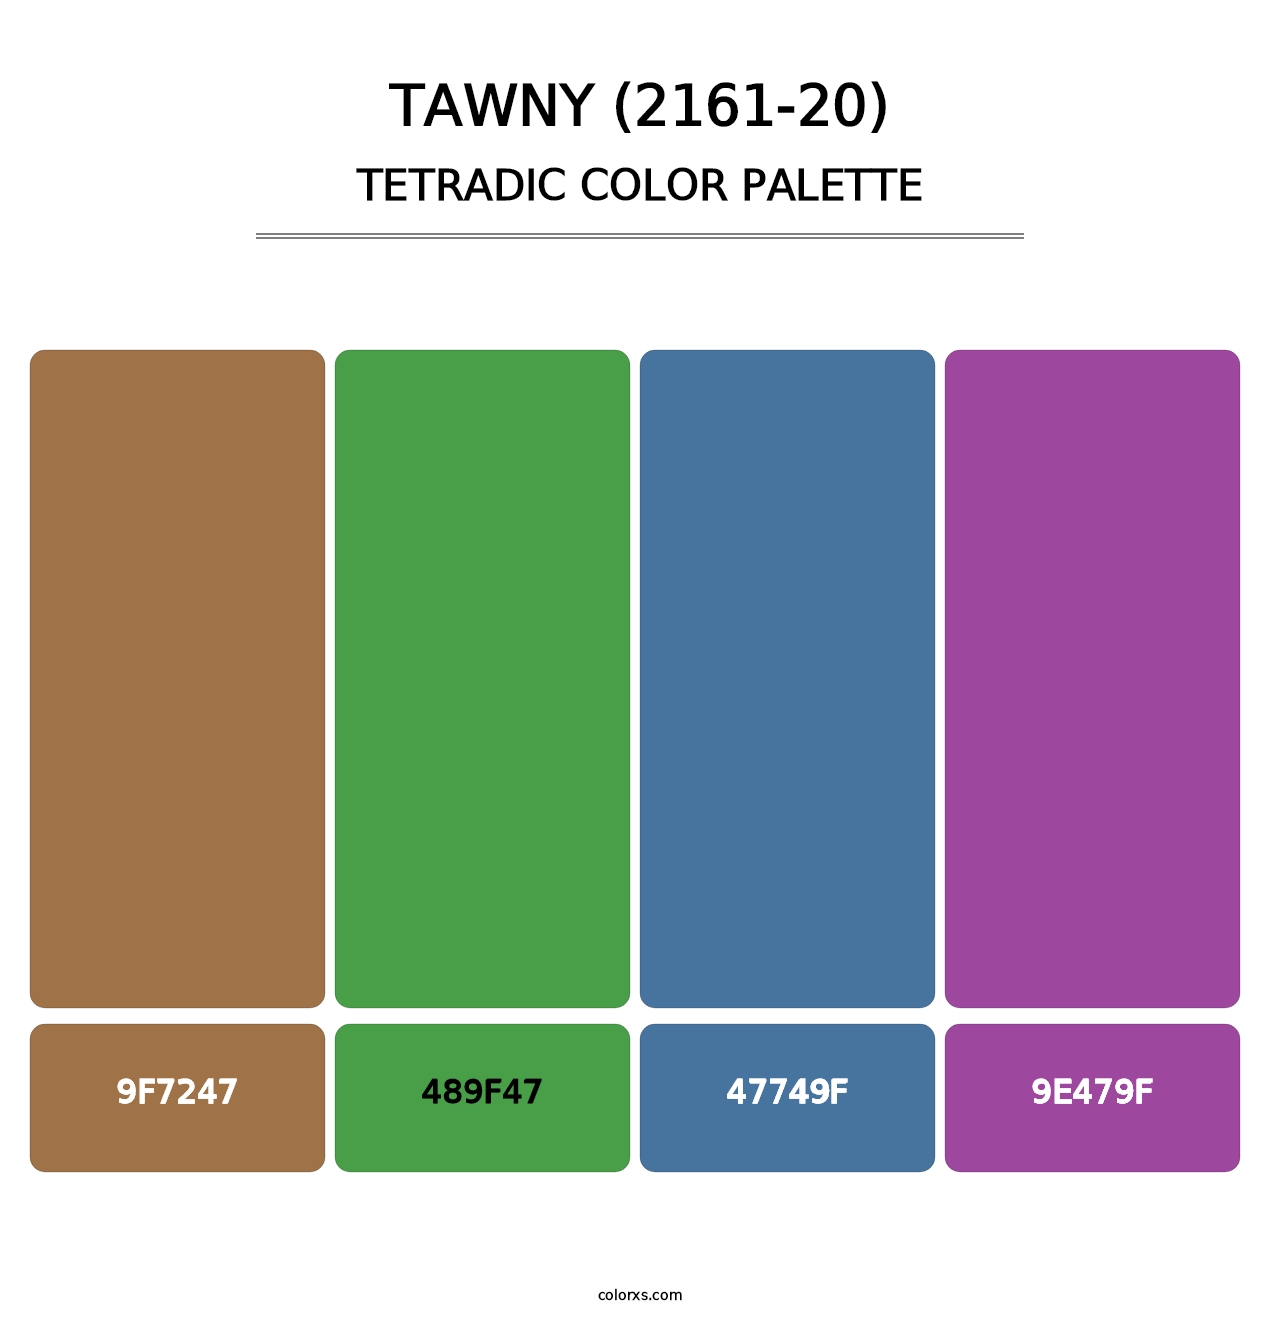 Tawny (2161-20) - Tetradic Color Palette